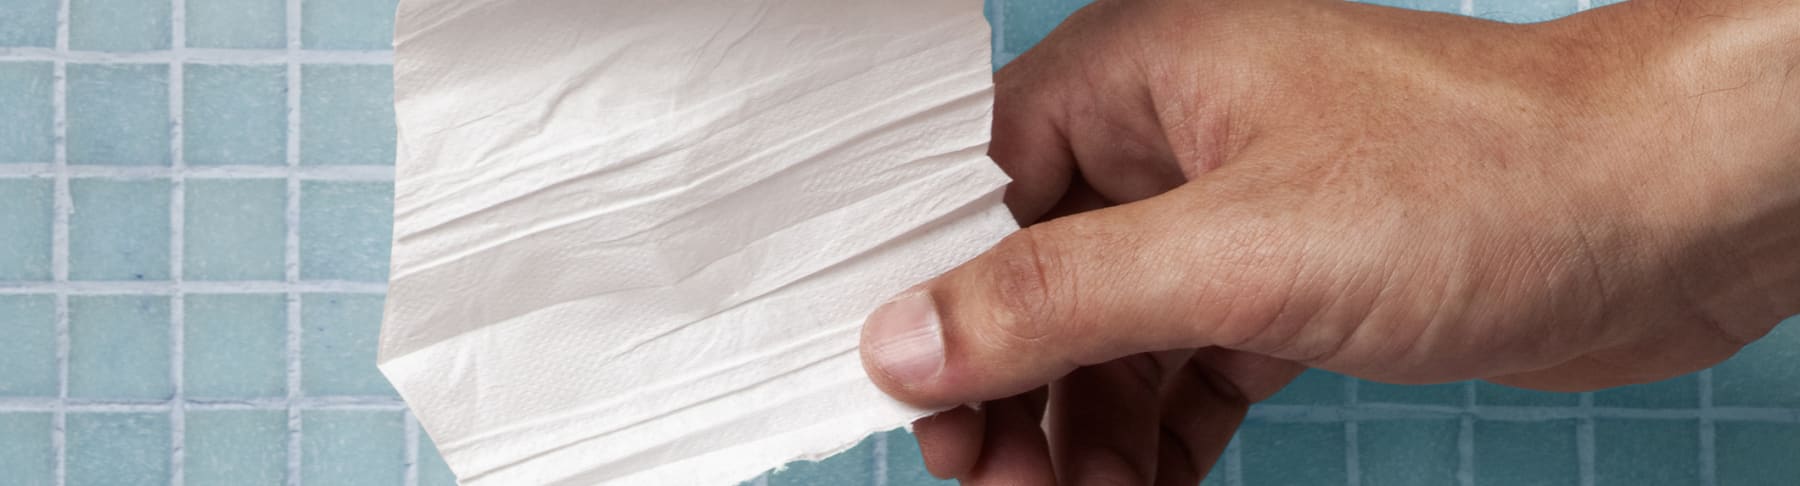 hand grabbing toilet paper